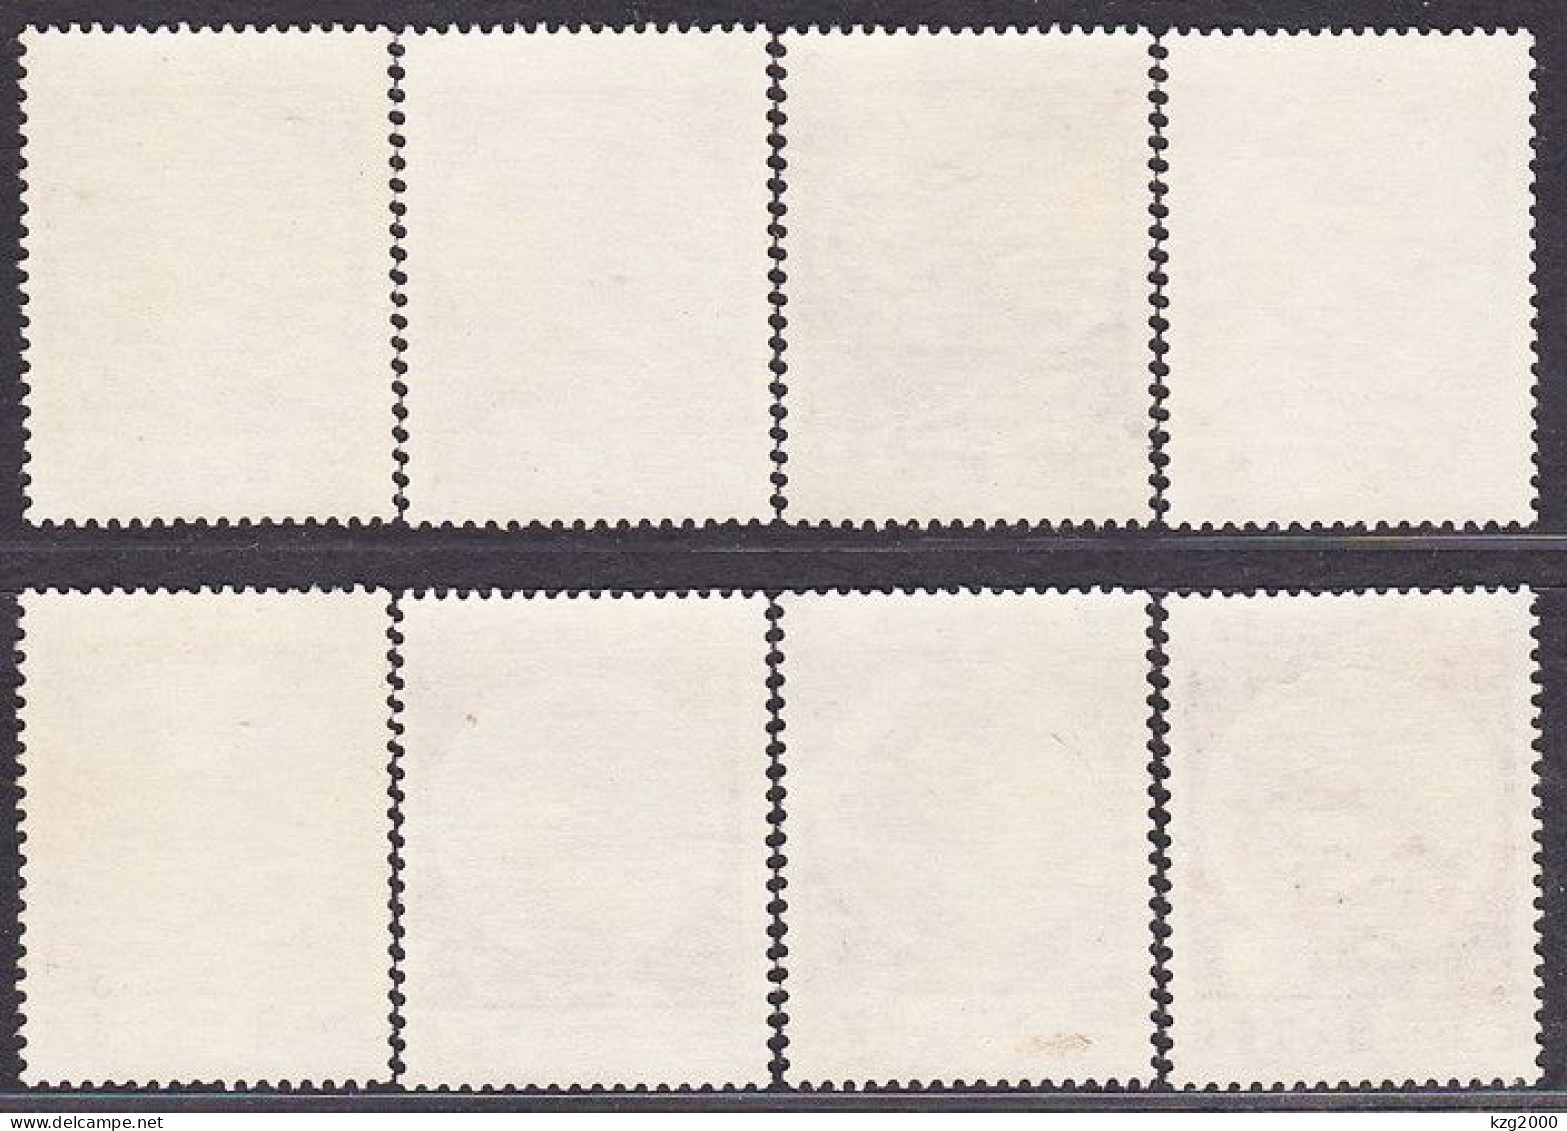 China Stamp 1959 C69 10th Anniv. Of Founding Of PRC (3rd Set) MNH Stamps - Ongebruikt